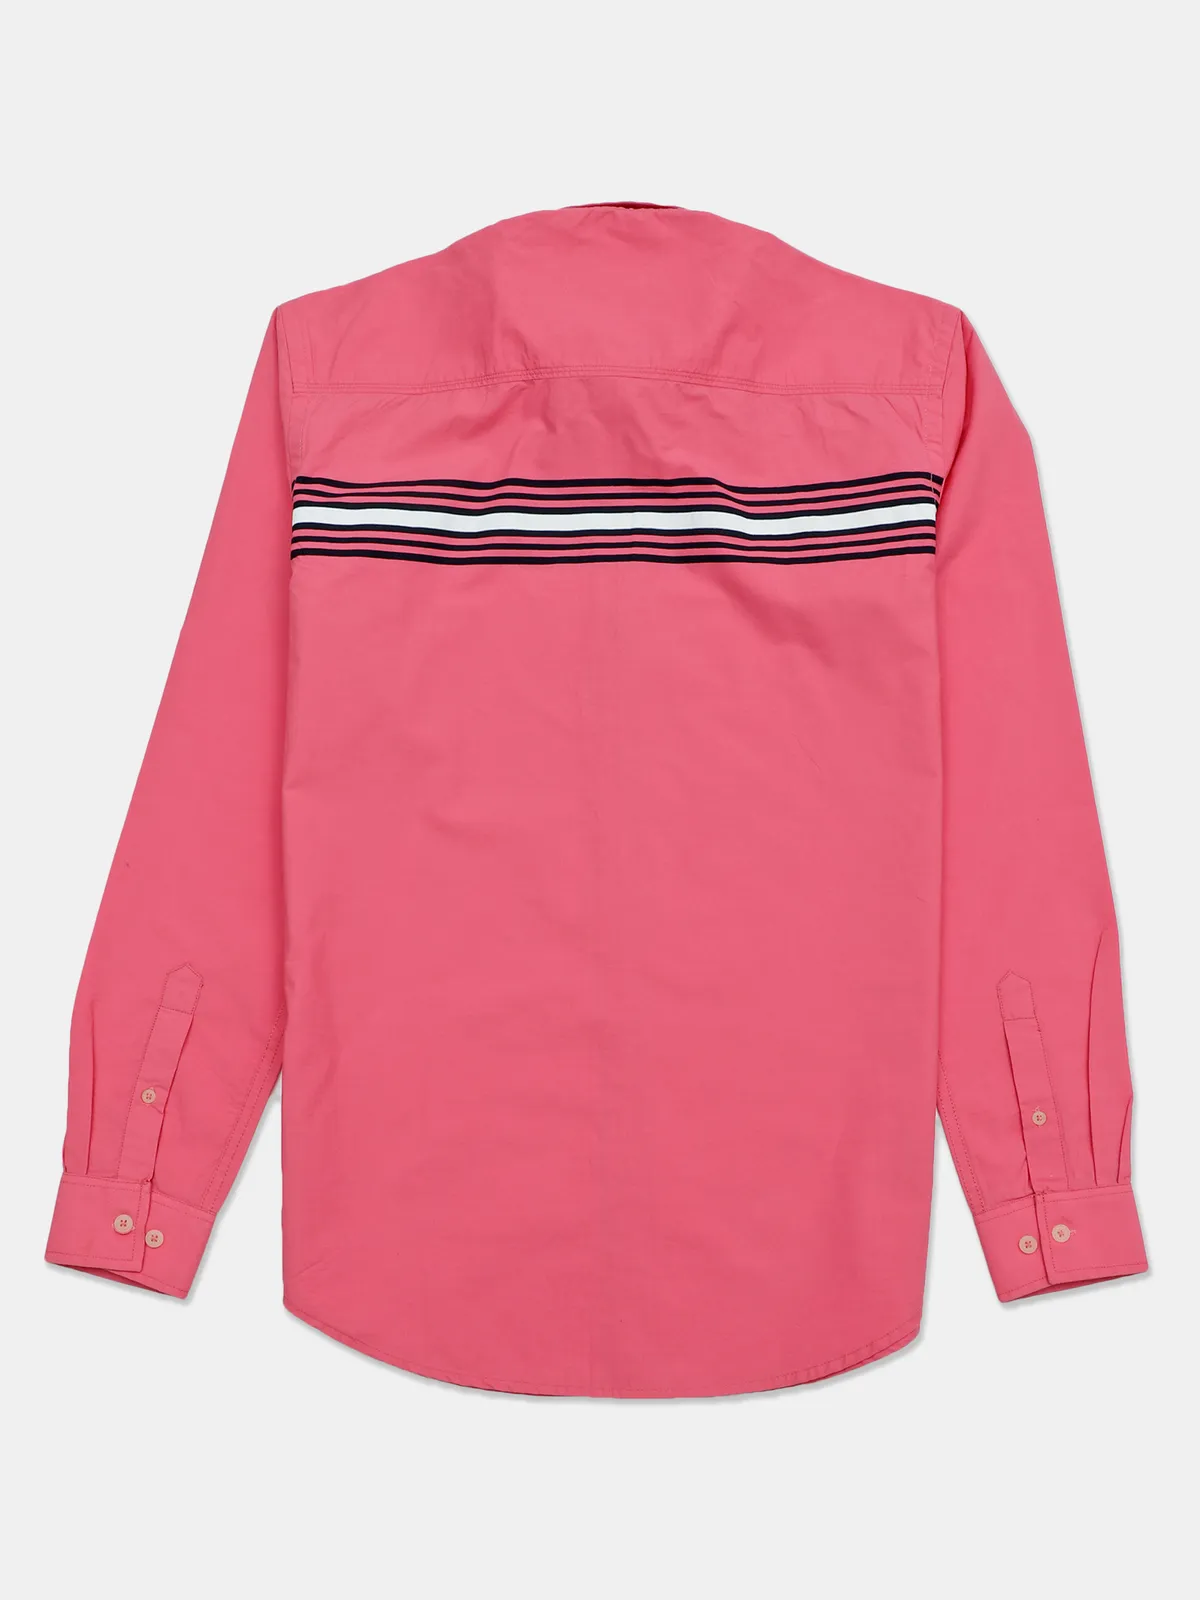 River Blue casual wear pink stripe shirt